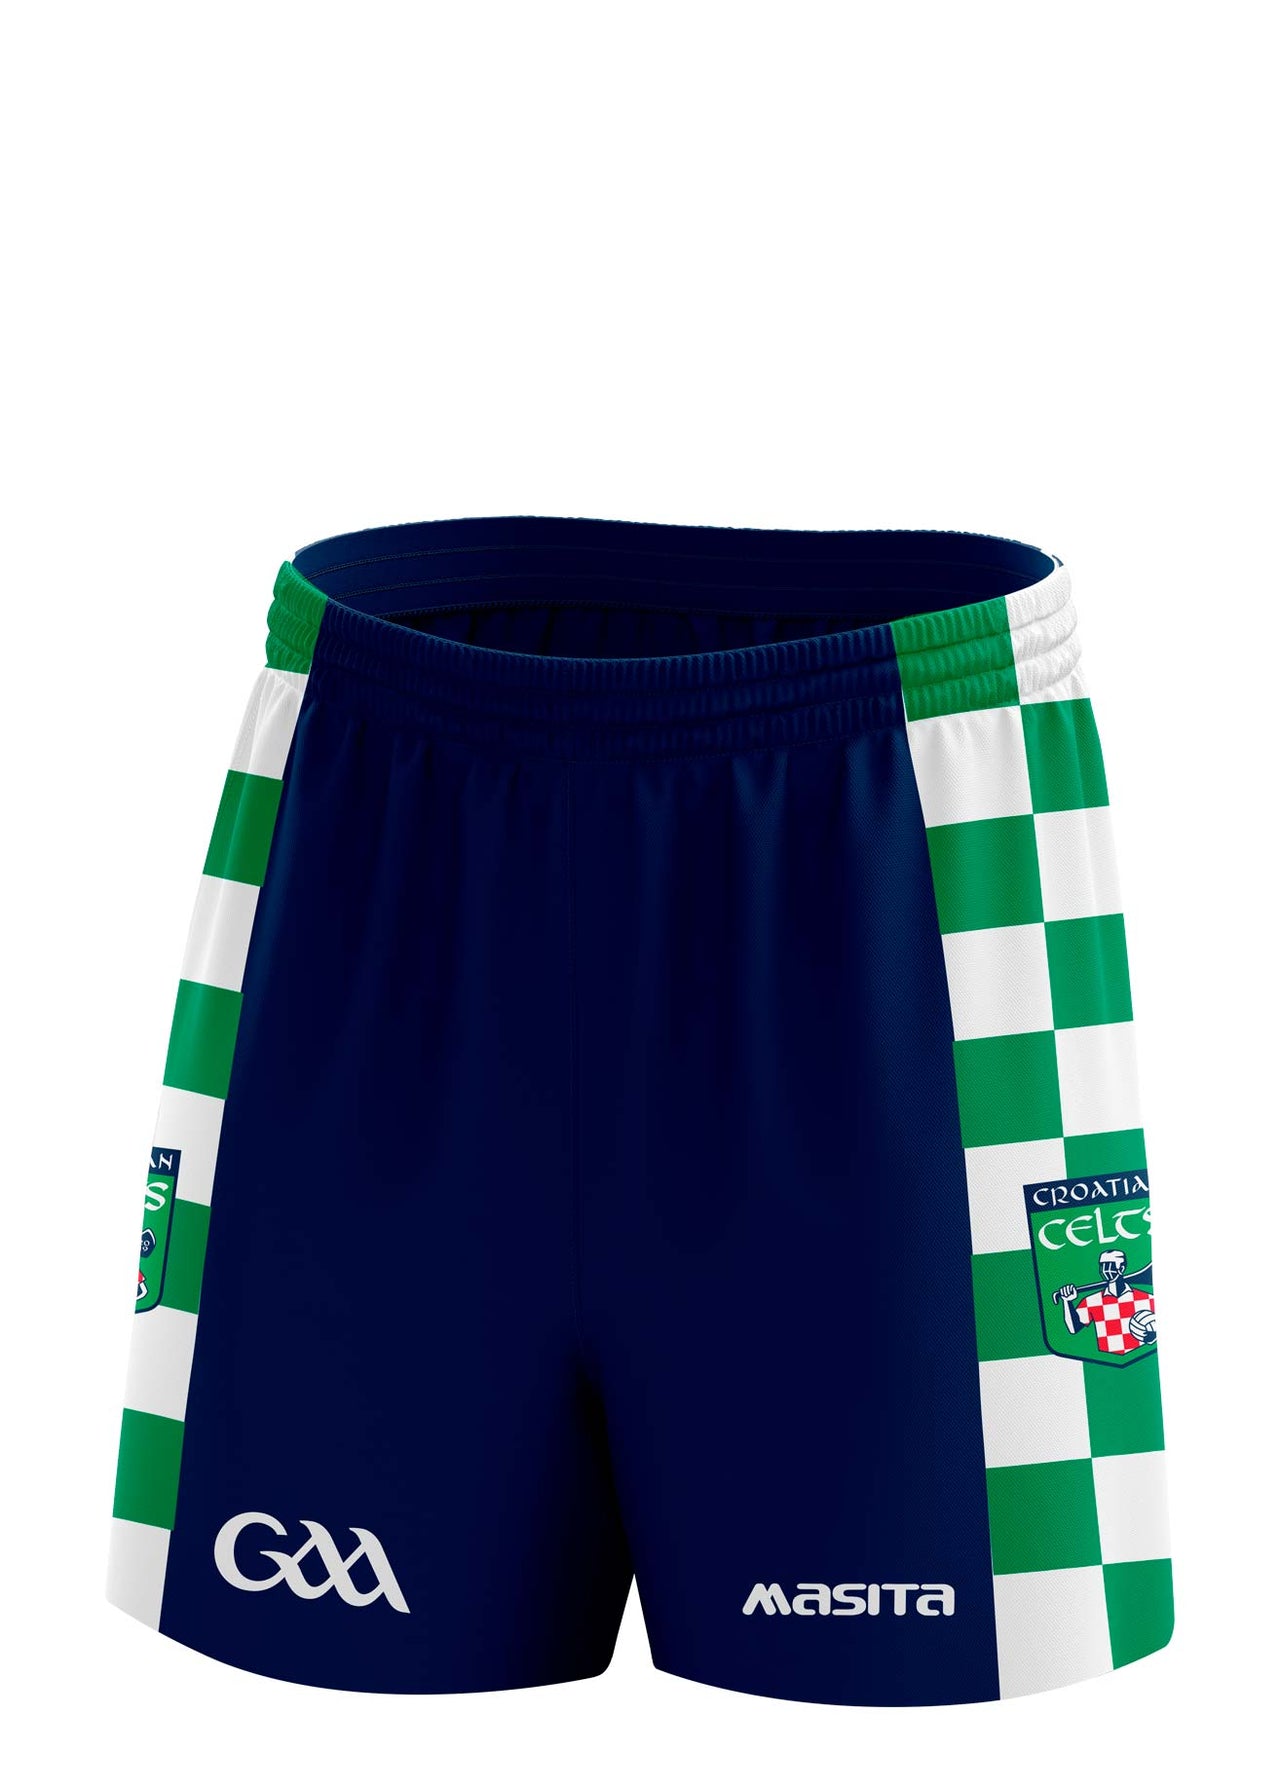 Croatian Celts Match Shorts Kids